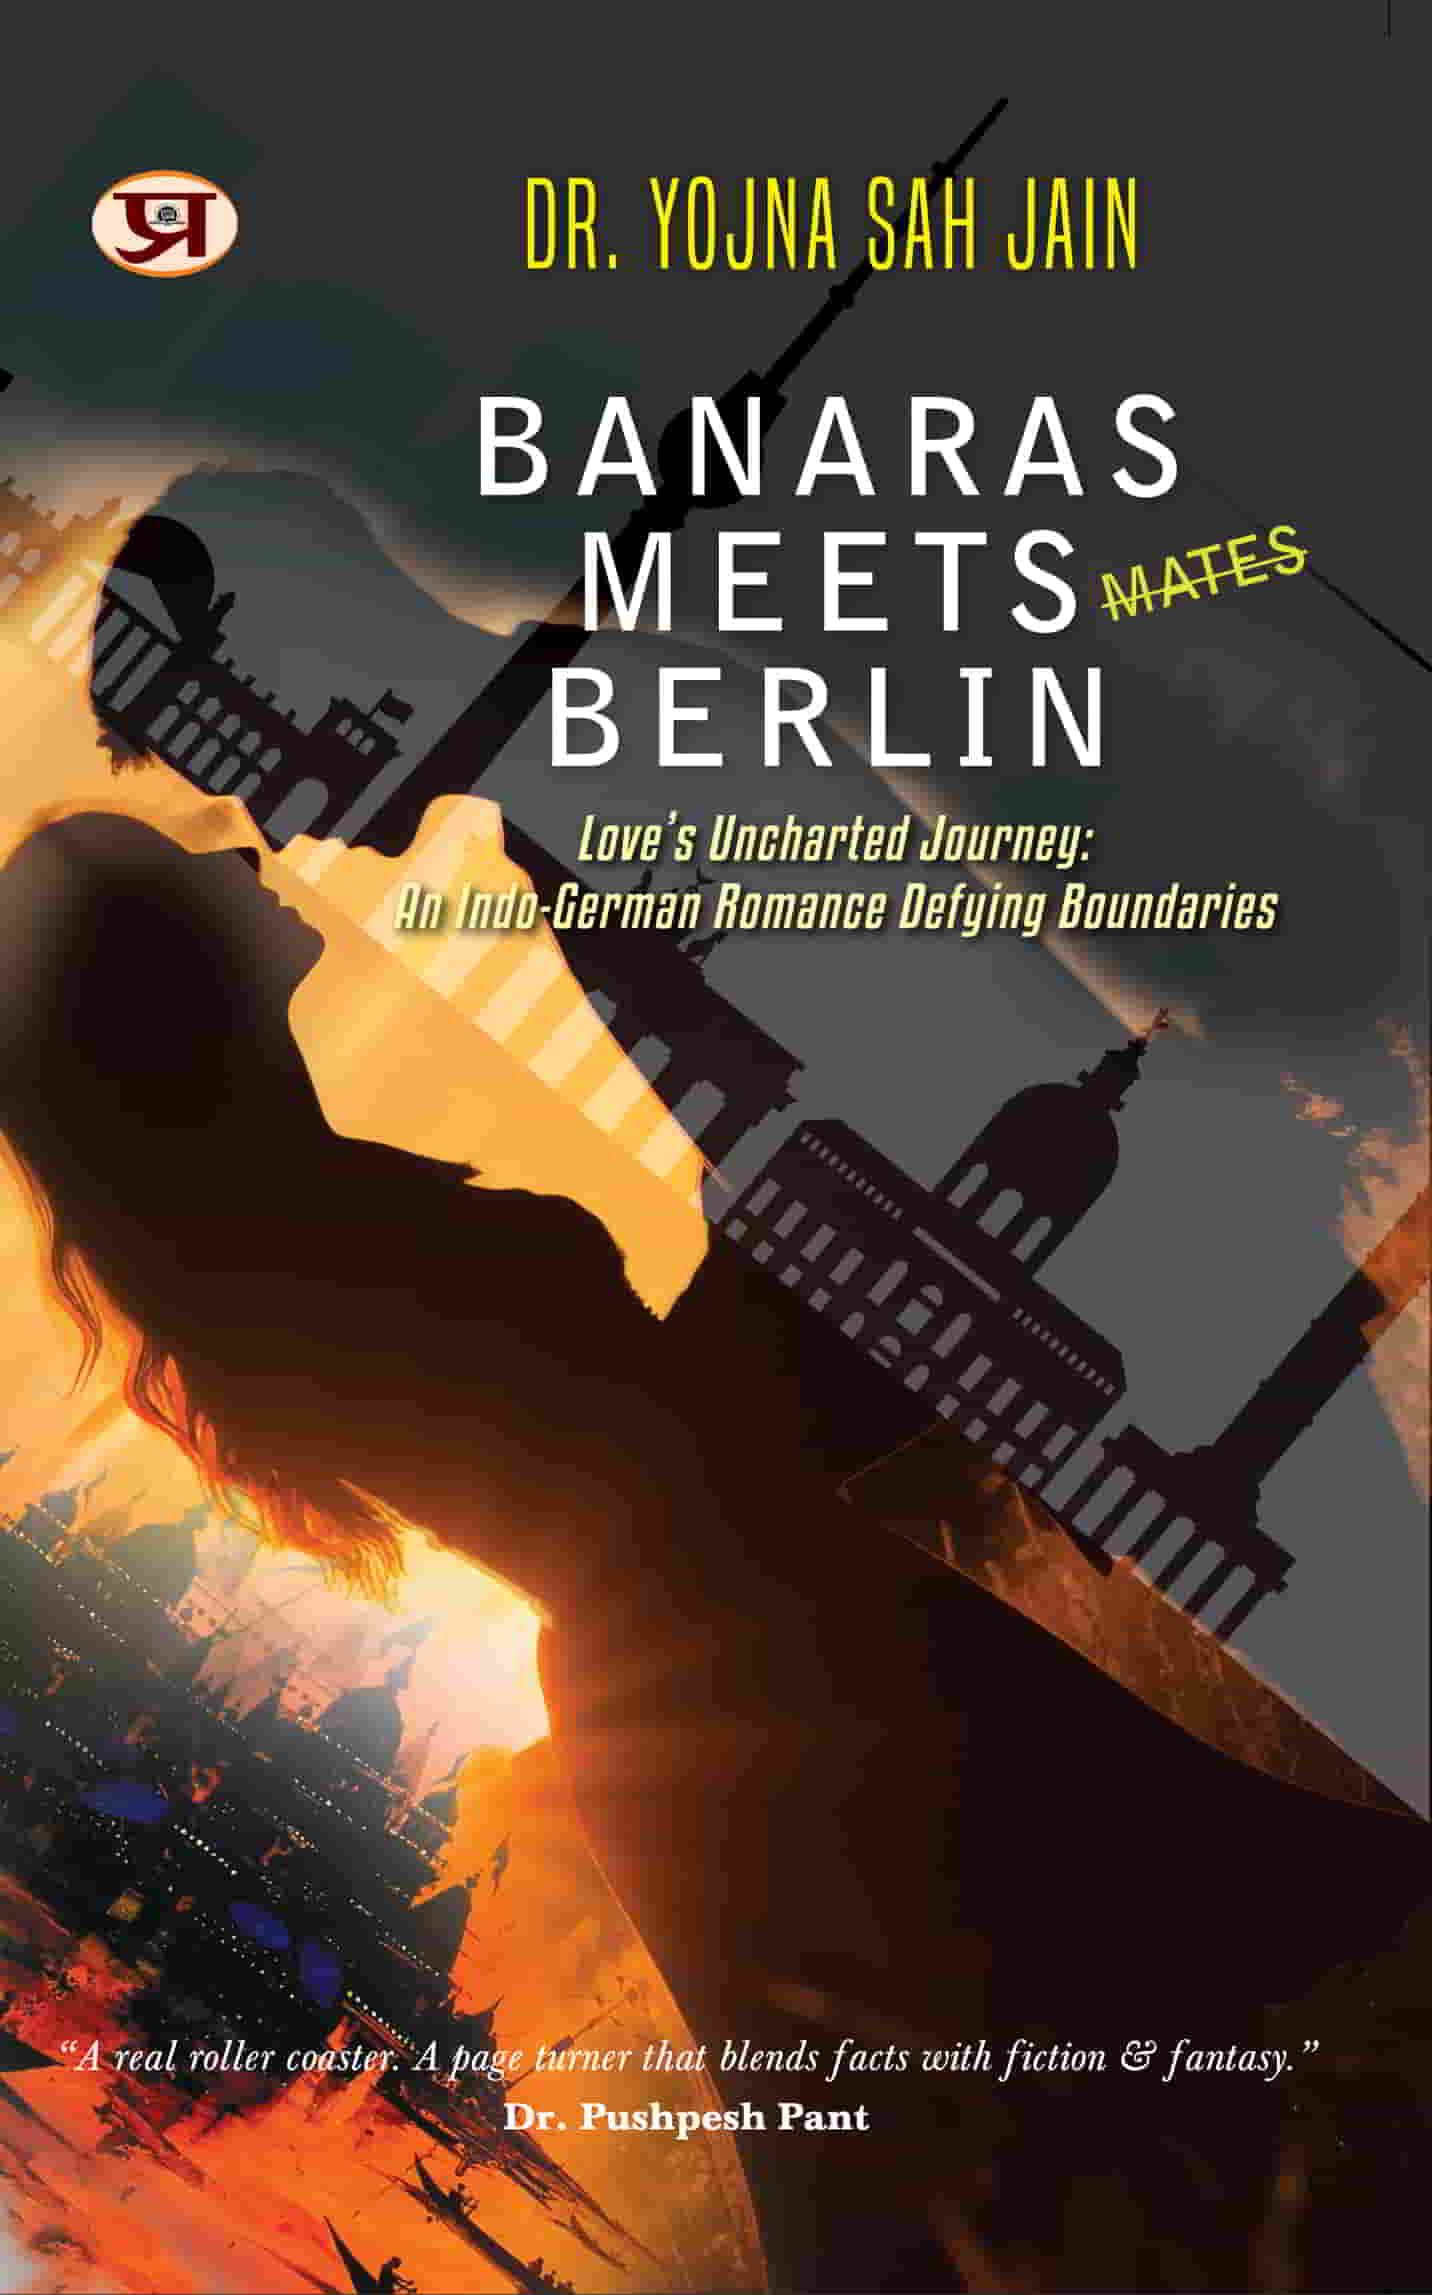 Banaras Meets Berlin | Love's Uncharted Journey: An Indo-German Romance Defying Boundaries by Dr. Yojna Shah Jain